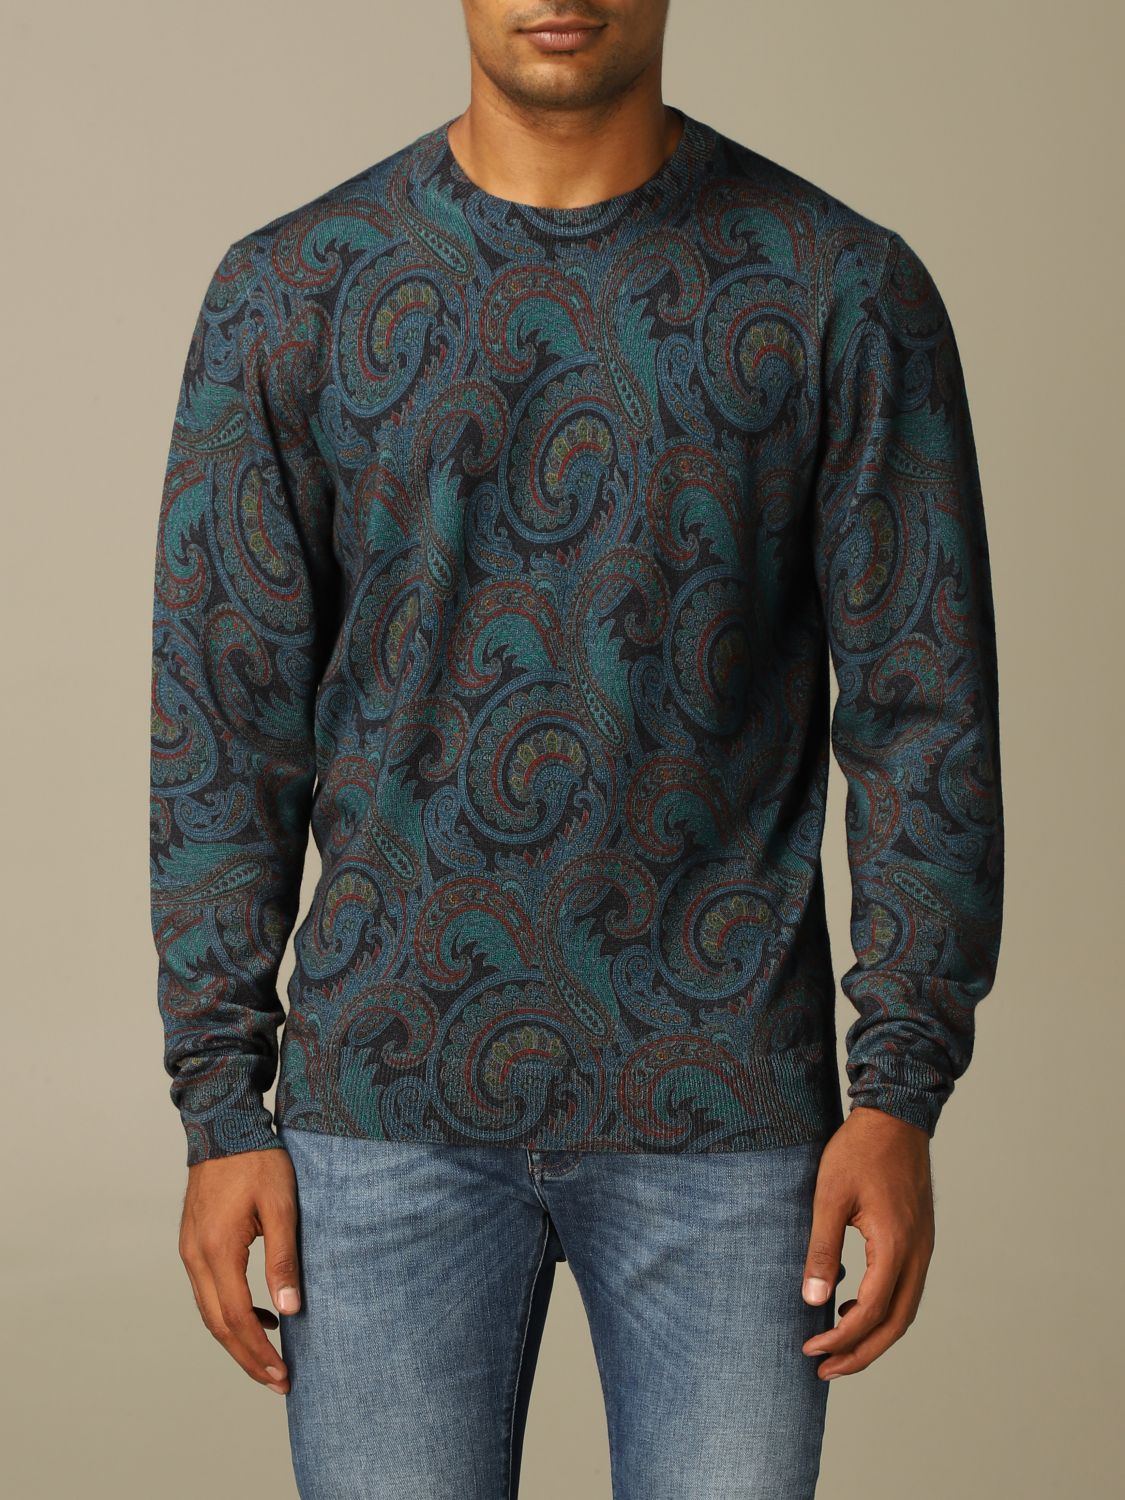 Nietje Gewond raken Alexander Graham Bell ETRO: paisley wool sweater - Blue | Etro sweater 1M064 9713 online on  GIGLIO.COM